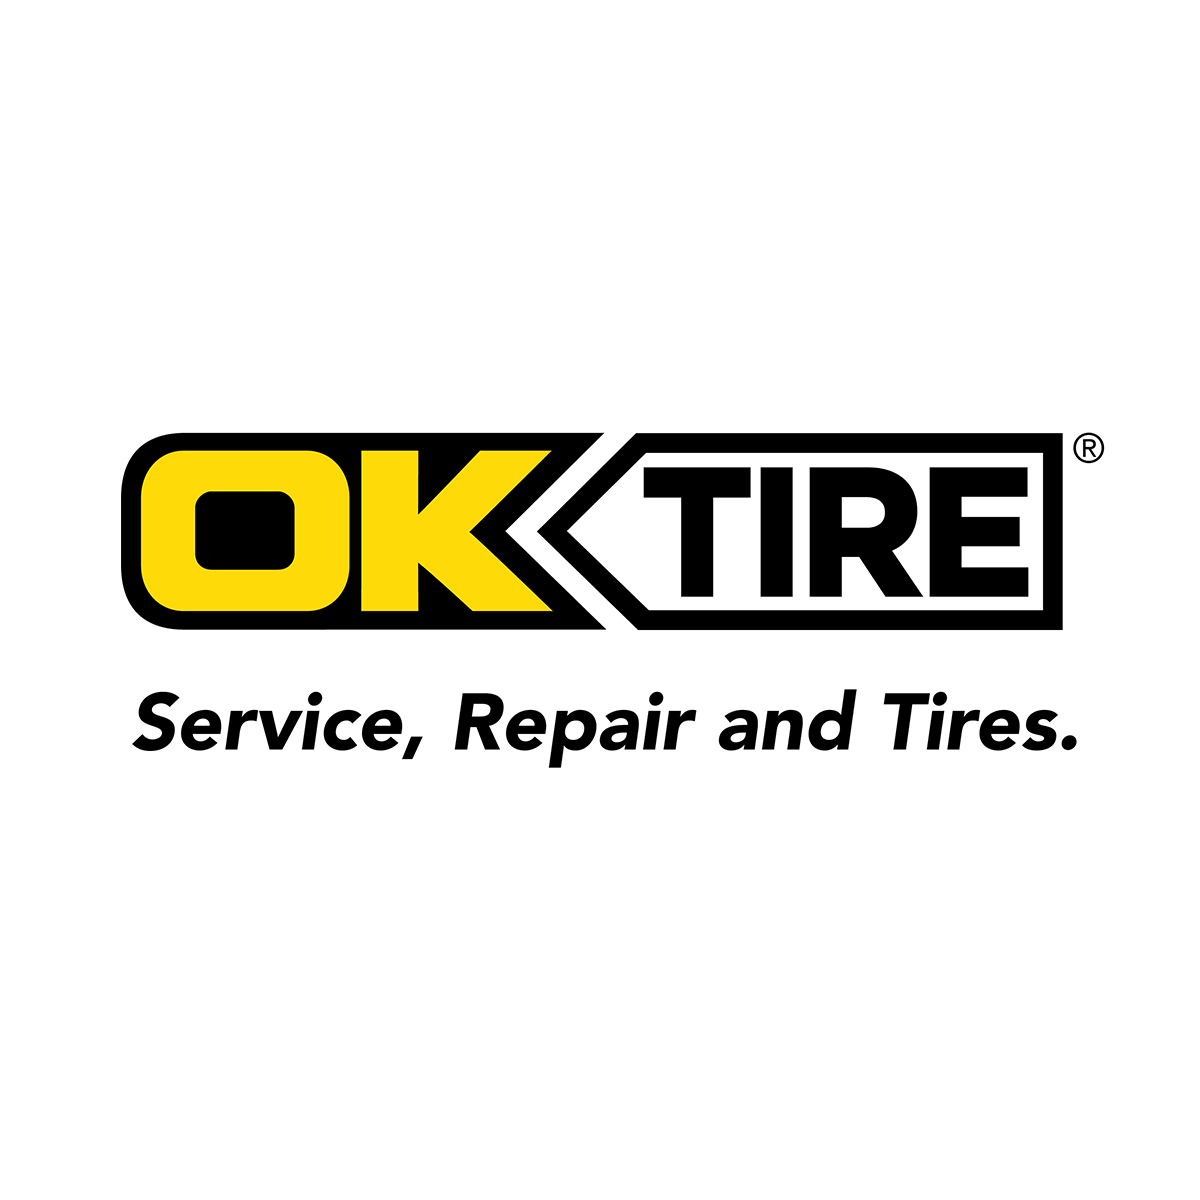 OK Tire Commercial - Car Repair & Service